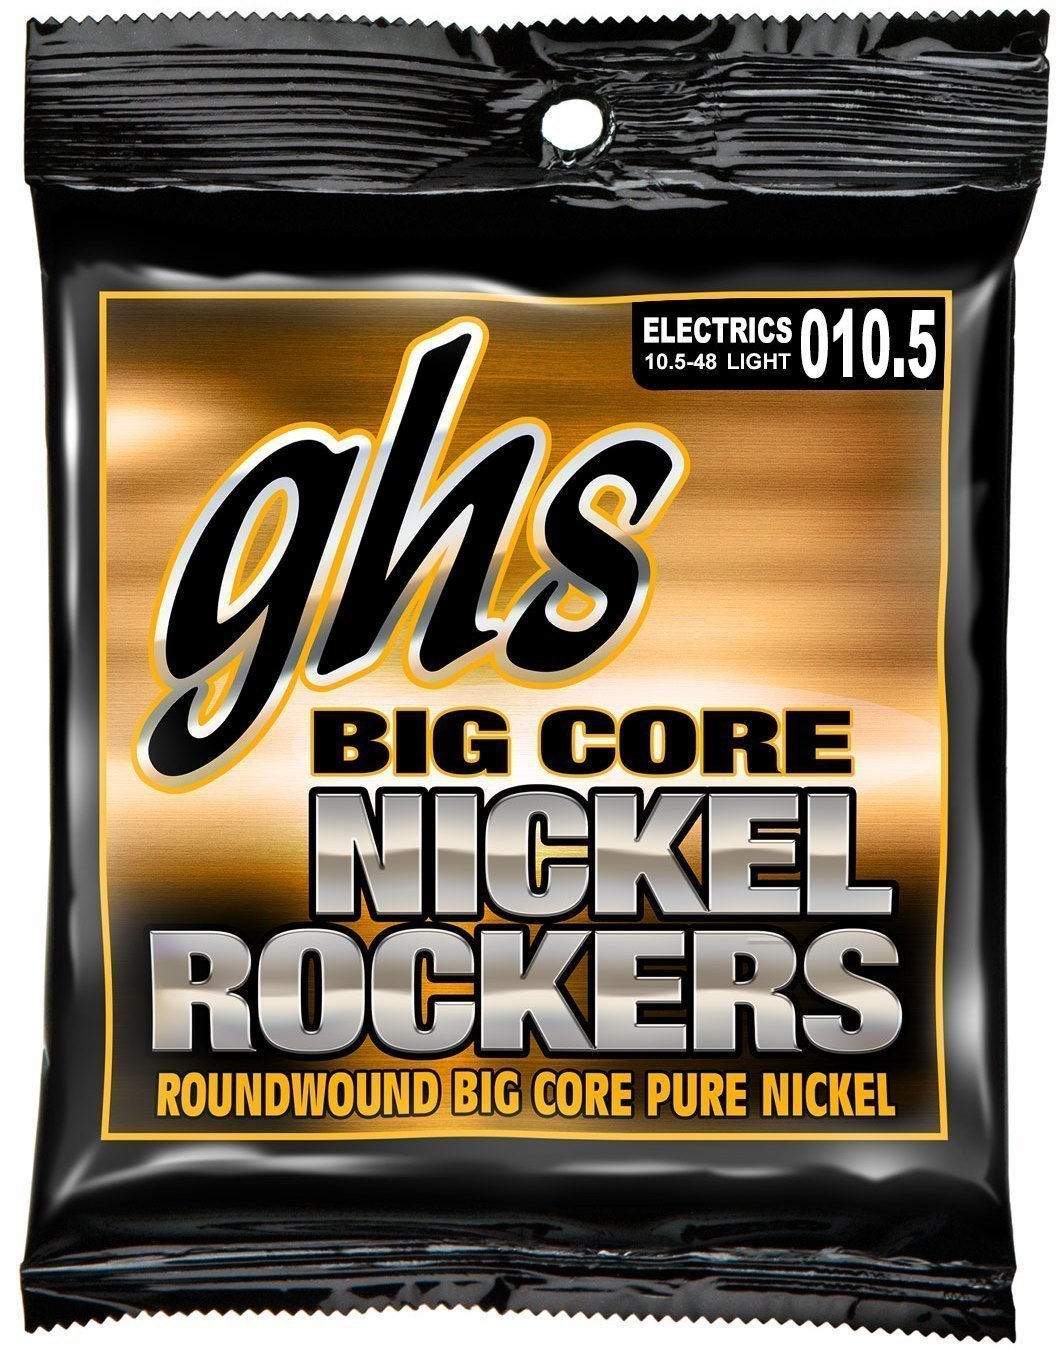 Saiten für E-Gitarre GHS Big Core Nickel Rockers 10,5-48